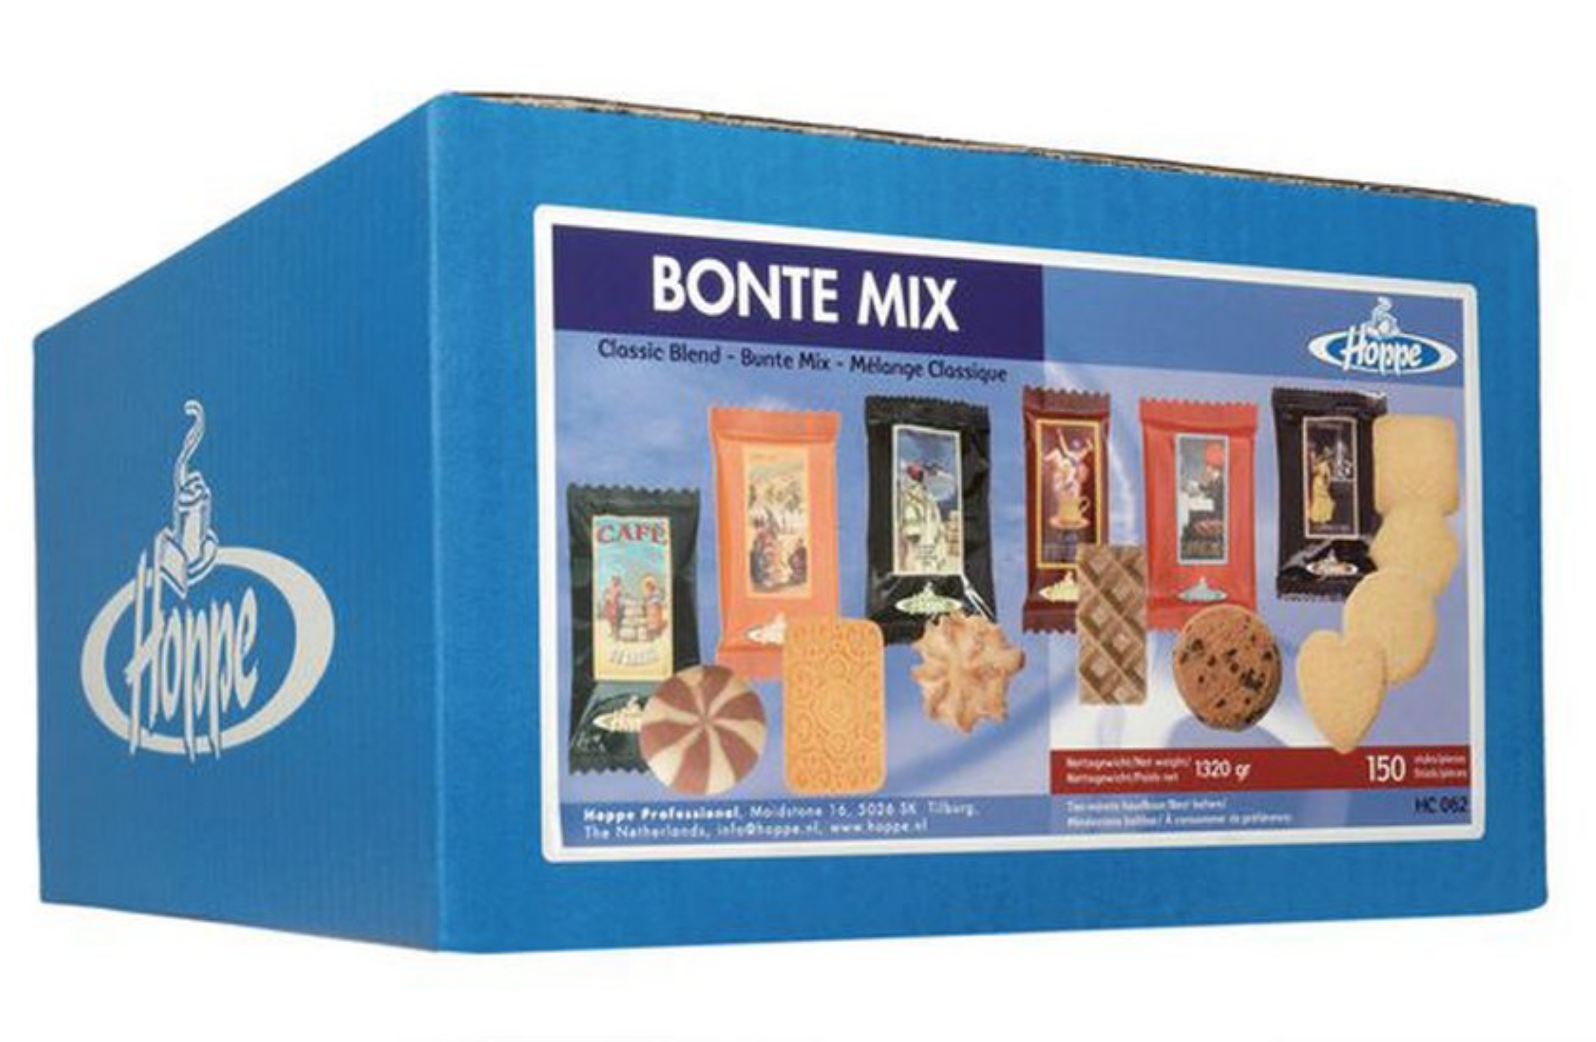  BONTE MIX - Keks